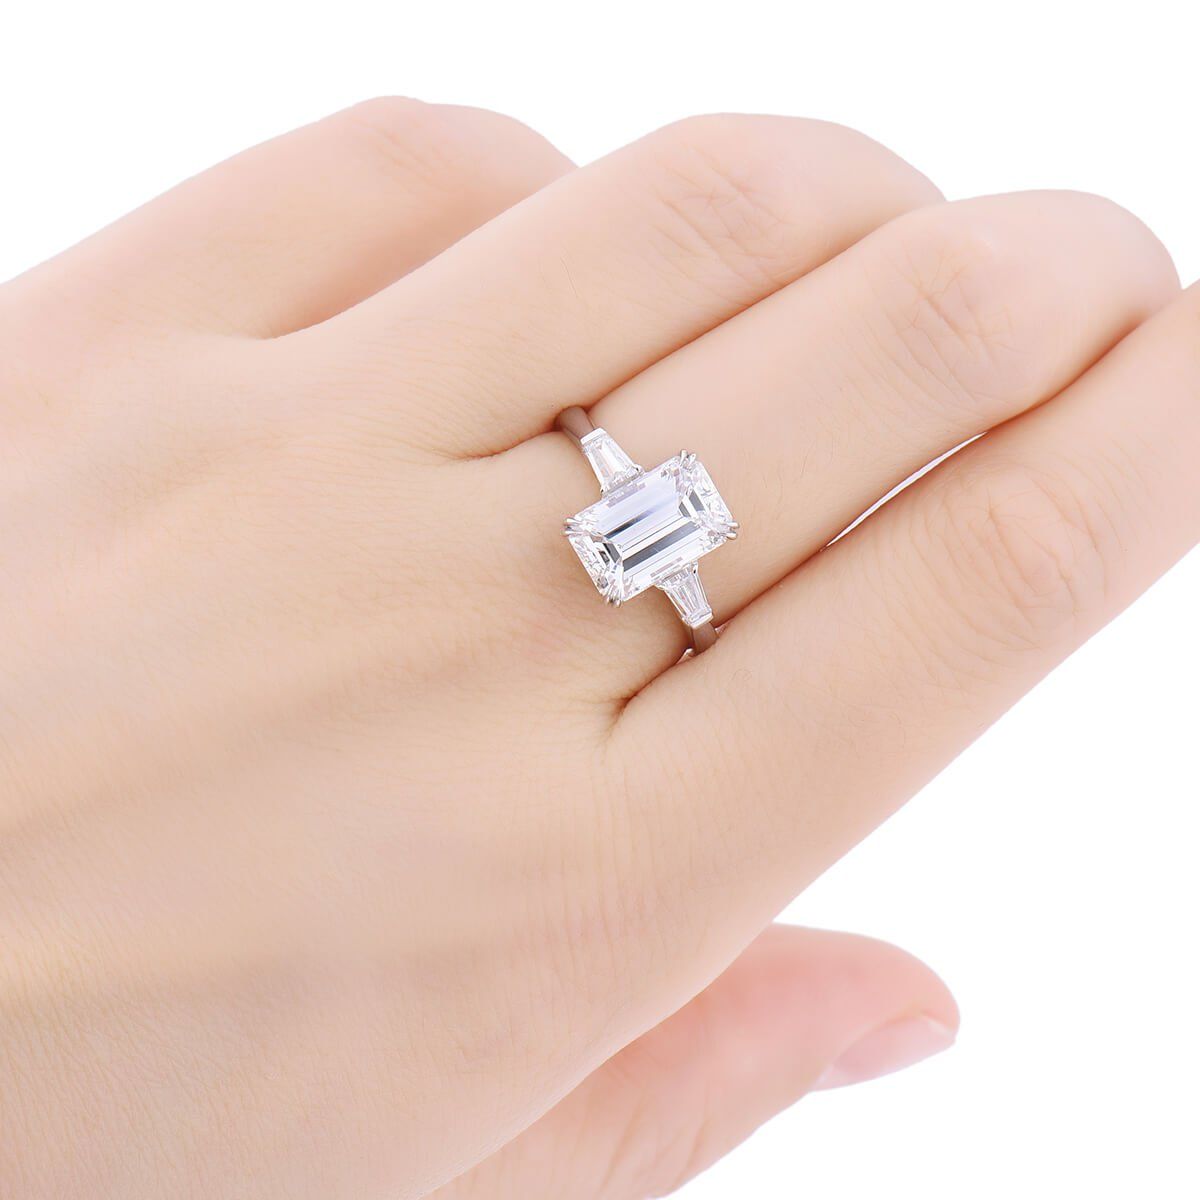  White Diamond Ring, 3.01 Ct. (3.39 Ct. TW), Emerald shape, GIA Certified, 7283389969